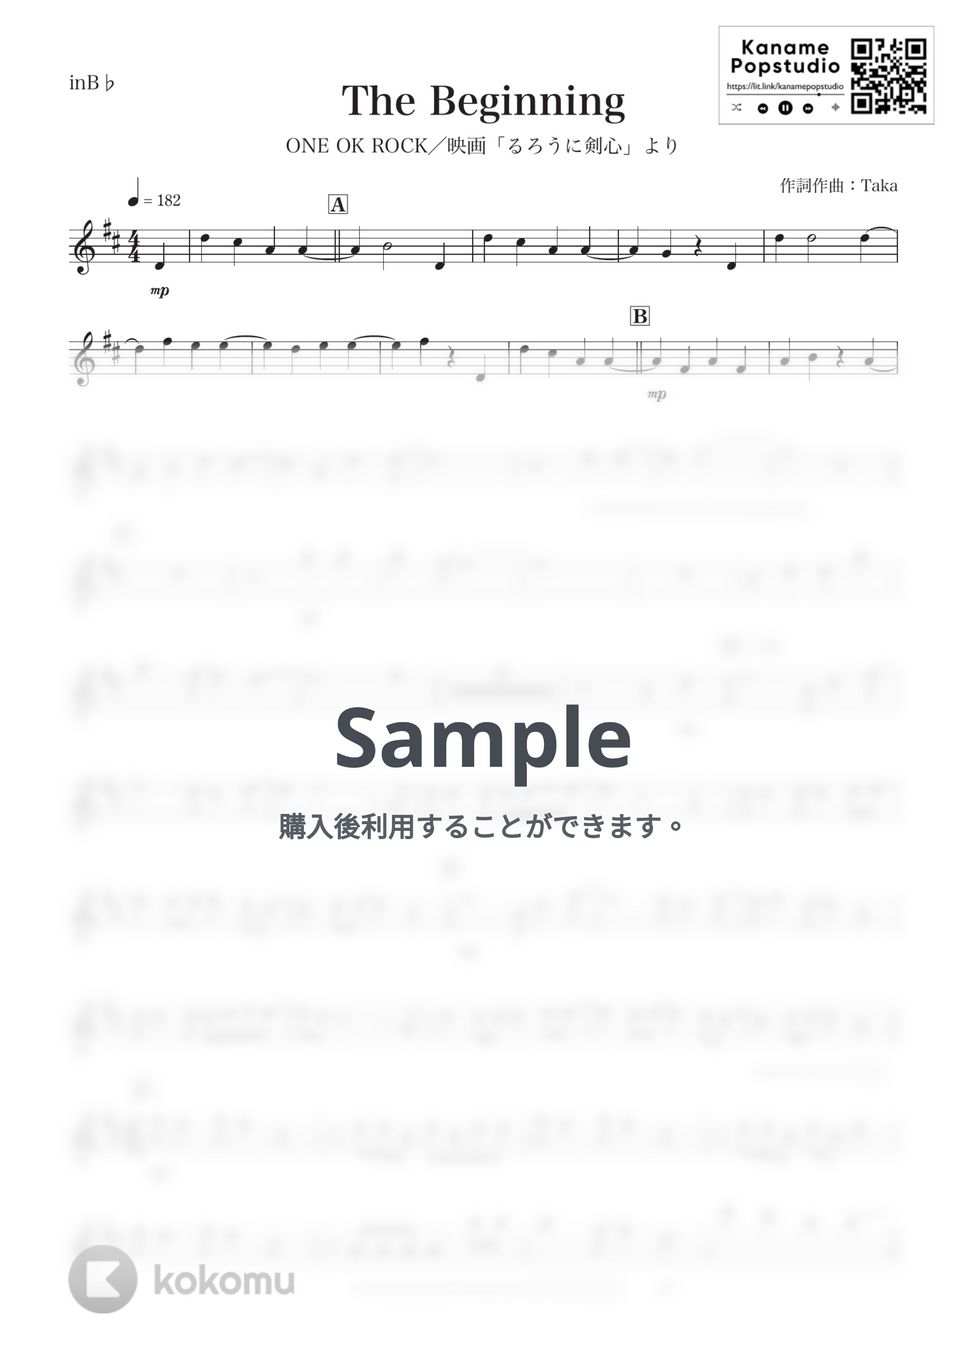 ONE OK ROCK - 【るろうに剣心】The Beginning (B♭) by Kaname@Popstudio